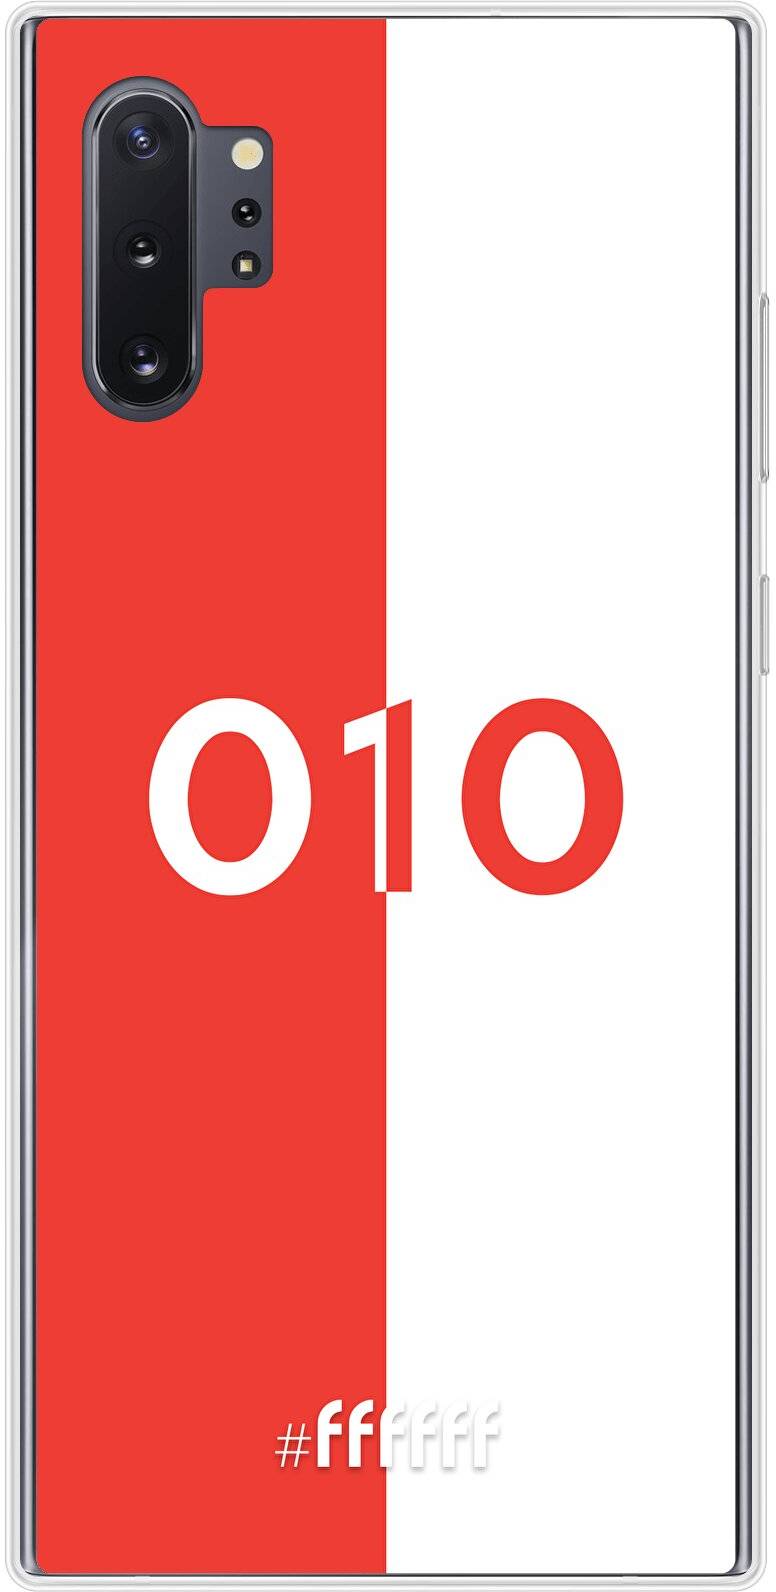 Feyenoord - 010 Galaxy Note 10 Plus